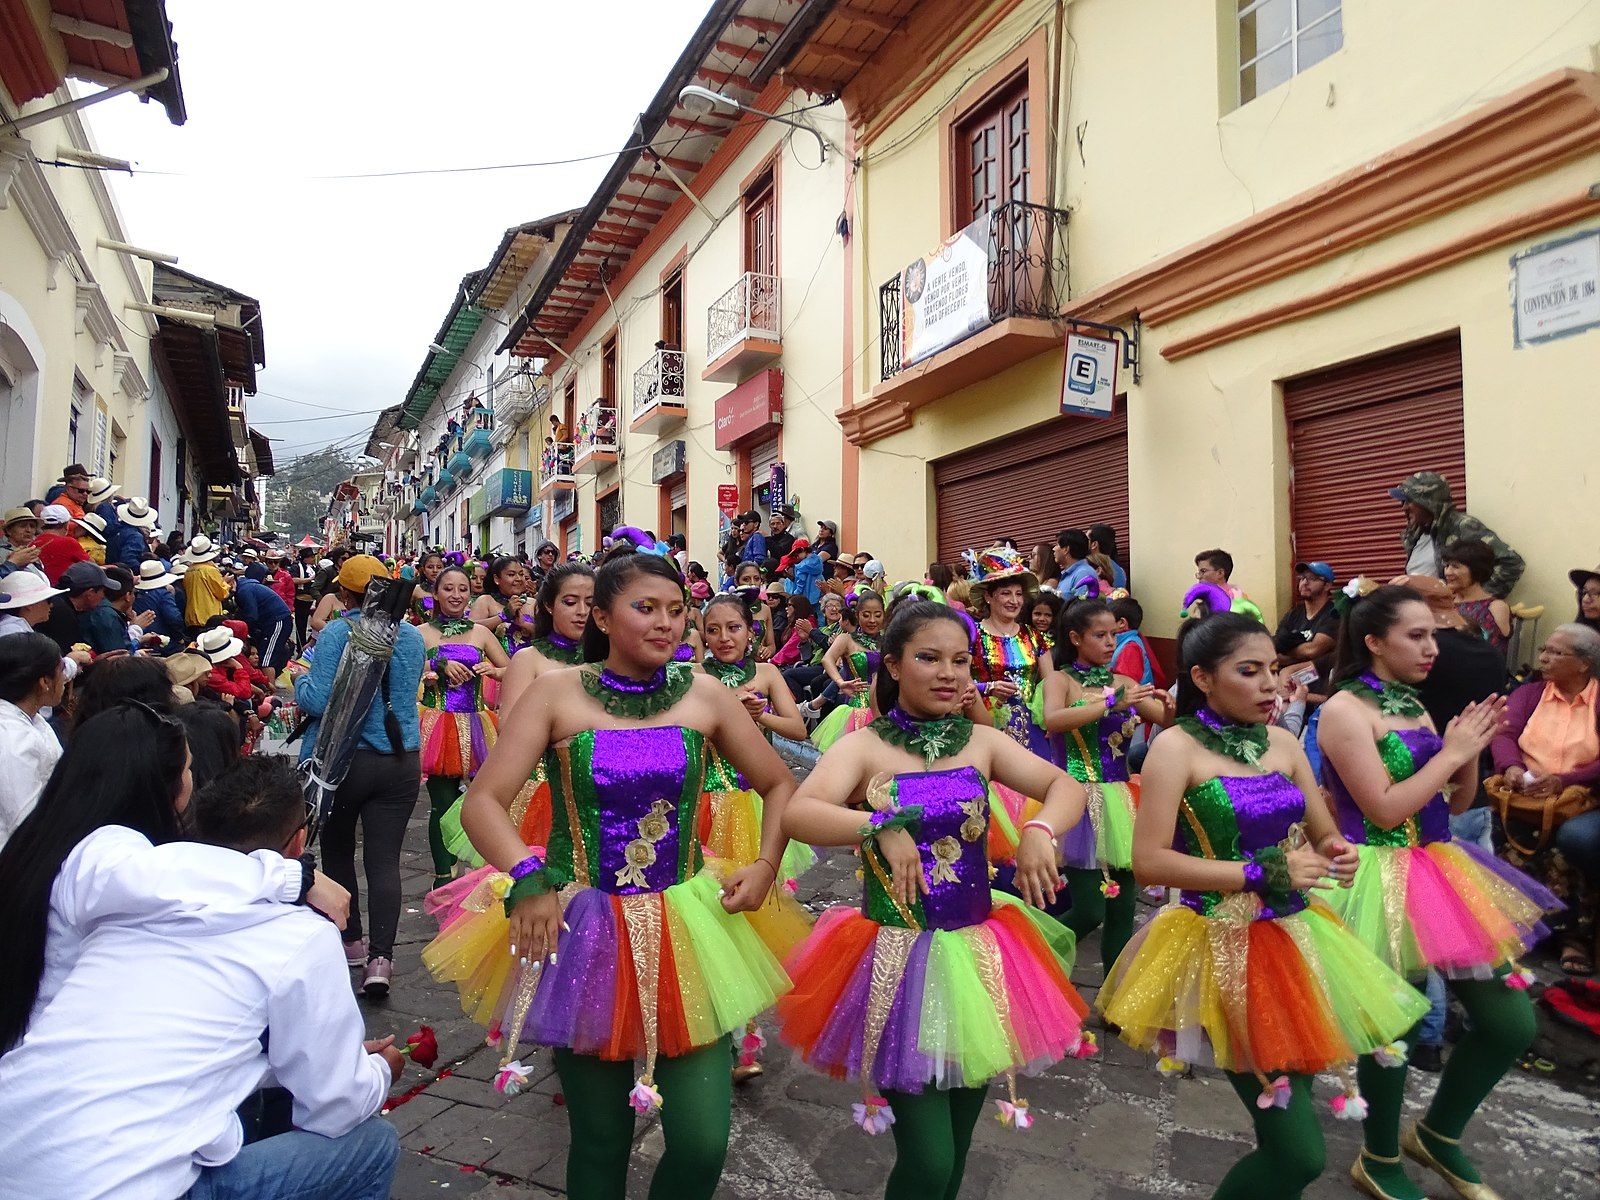 Carnival dancing in Guaranda, a small Ecuadorian city. Photo: Wikimedia Commons.